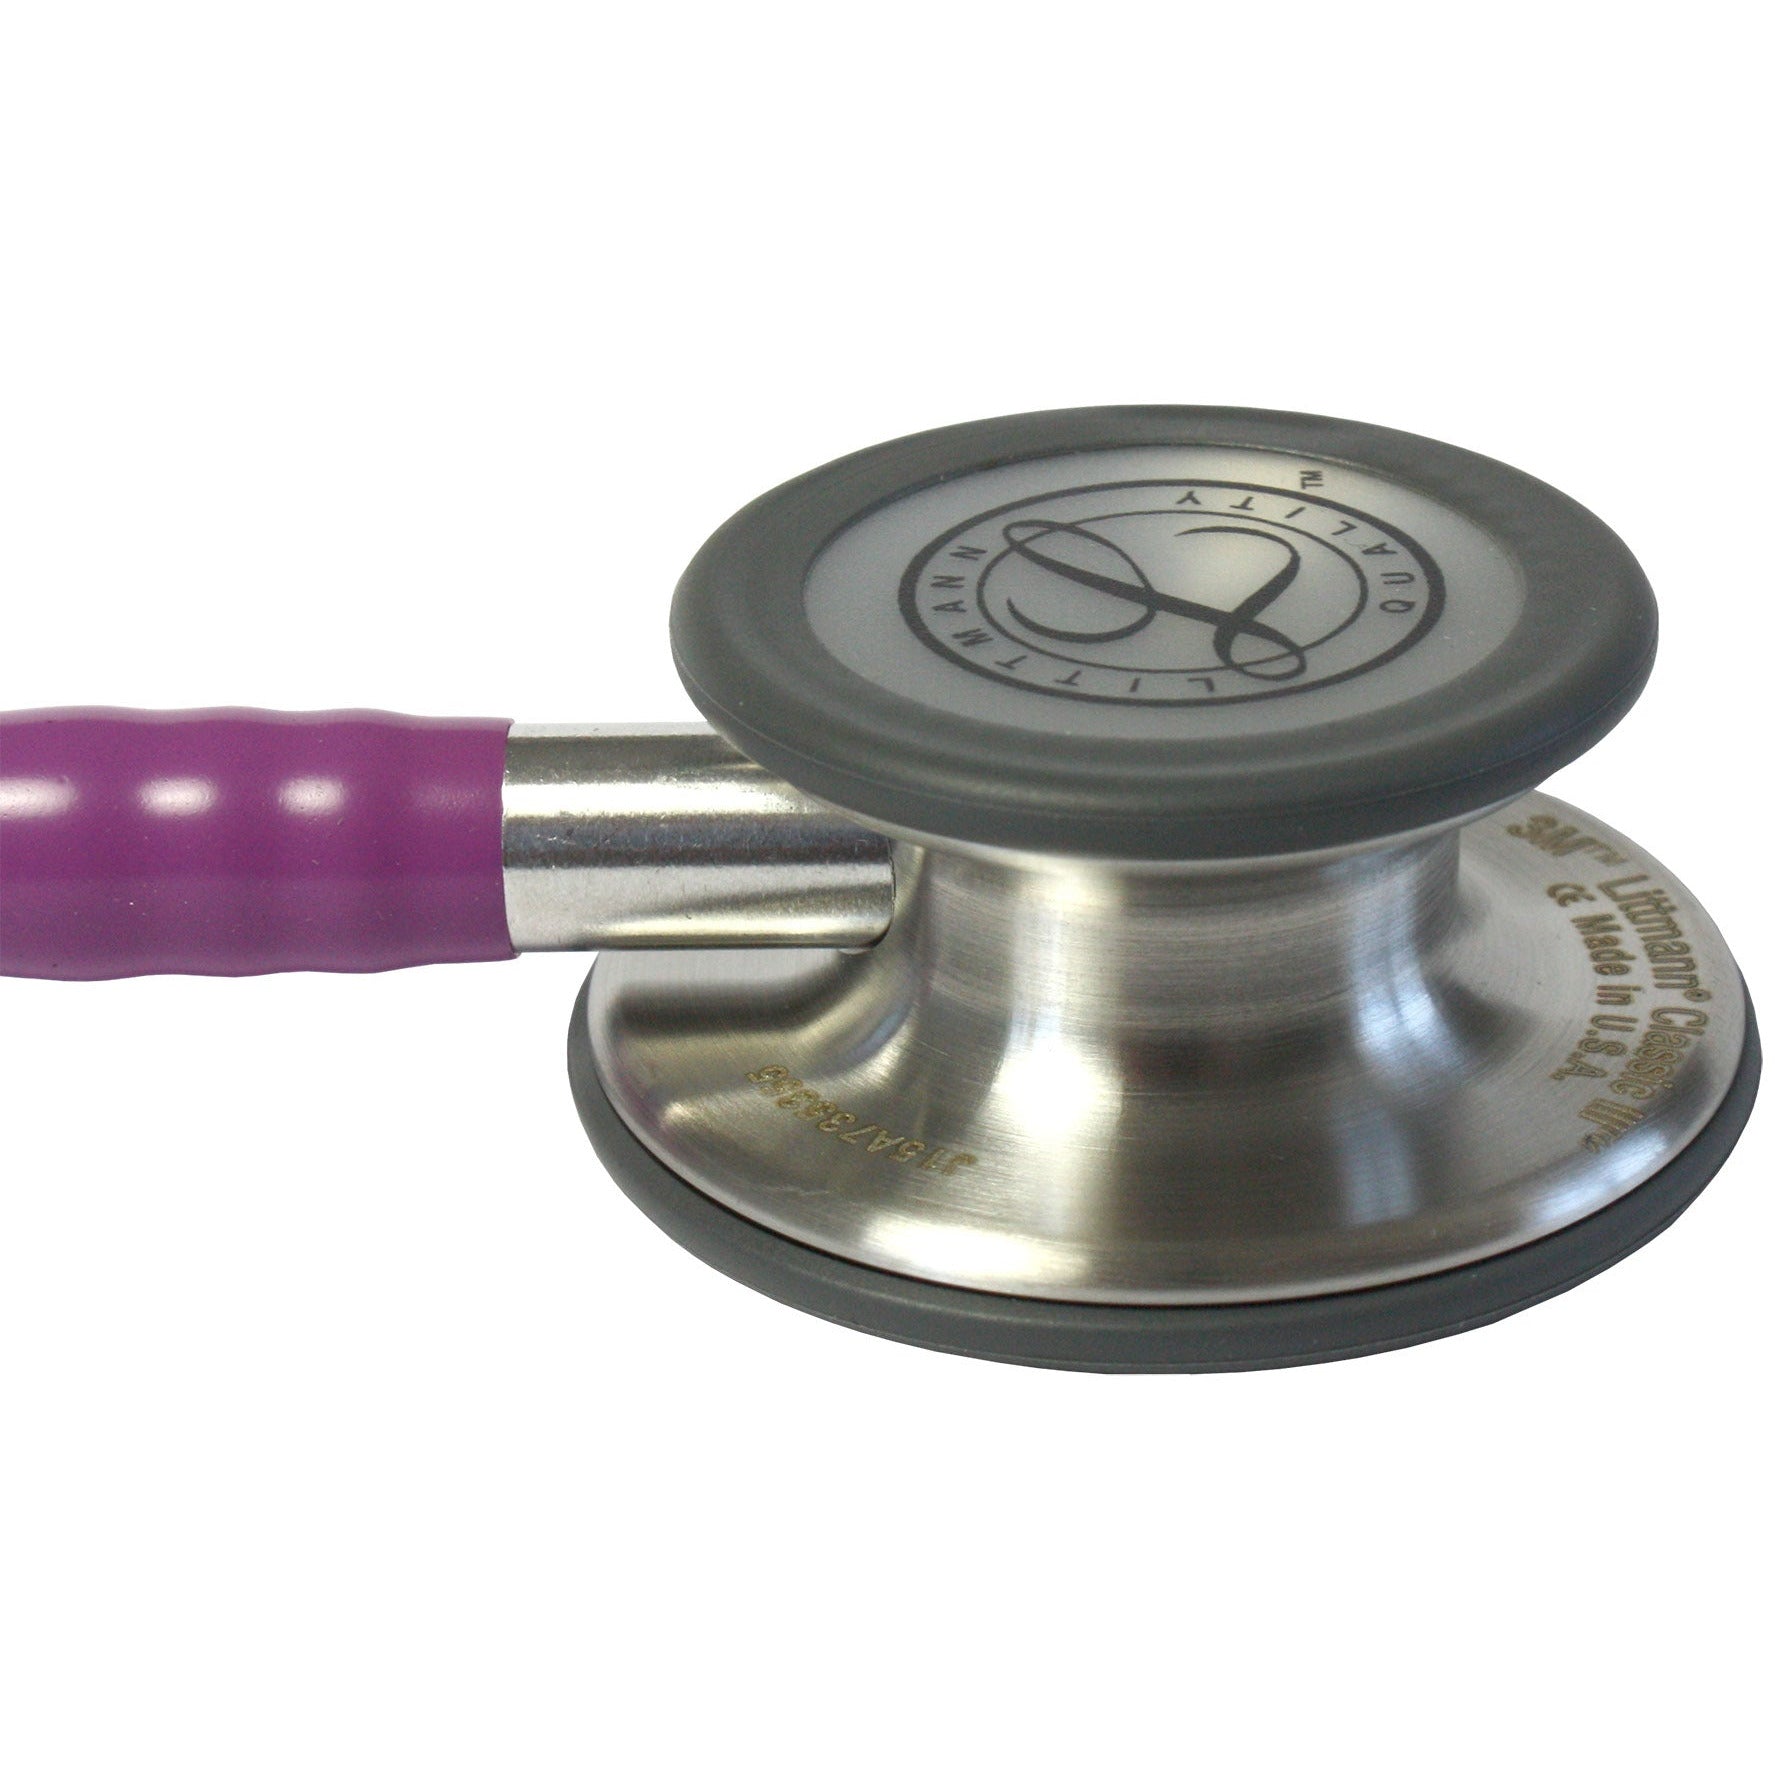 Littmann Classic III Stethoscope: Lavender 5832 - Student Program 3M Littmann